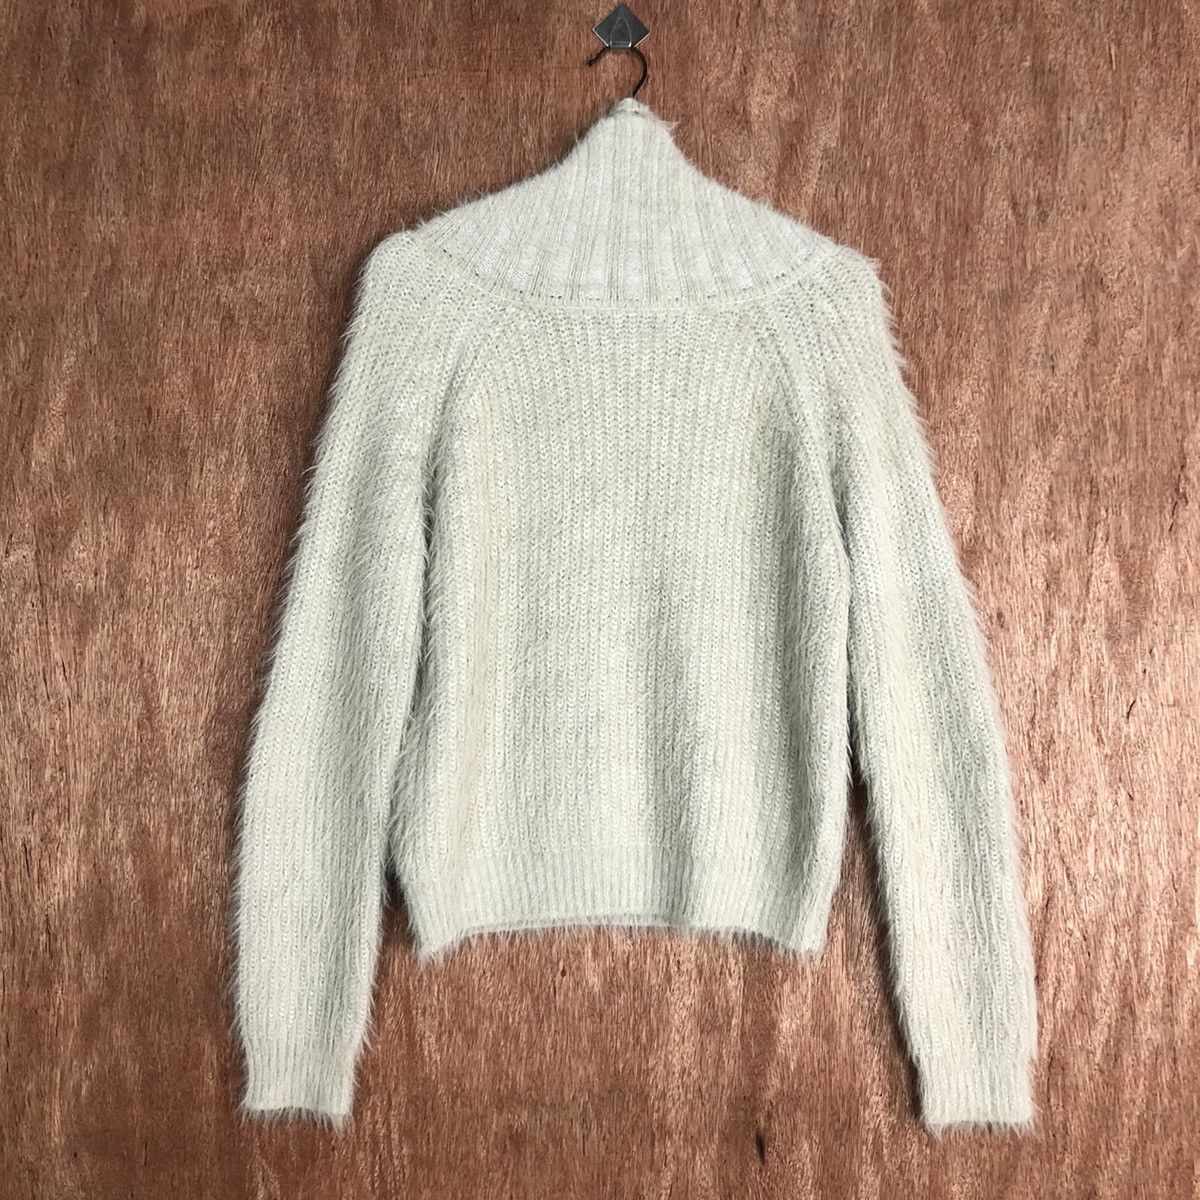 Homespun Knitwear Turtle Neck Mohair Knit Sweater Size US S / EU 44-46 / 1 - 9 Thumbnail